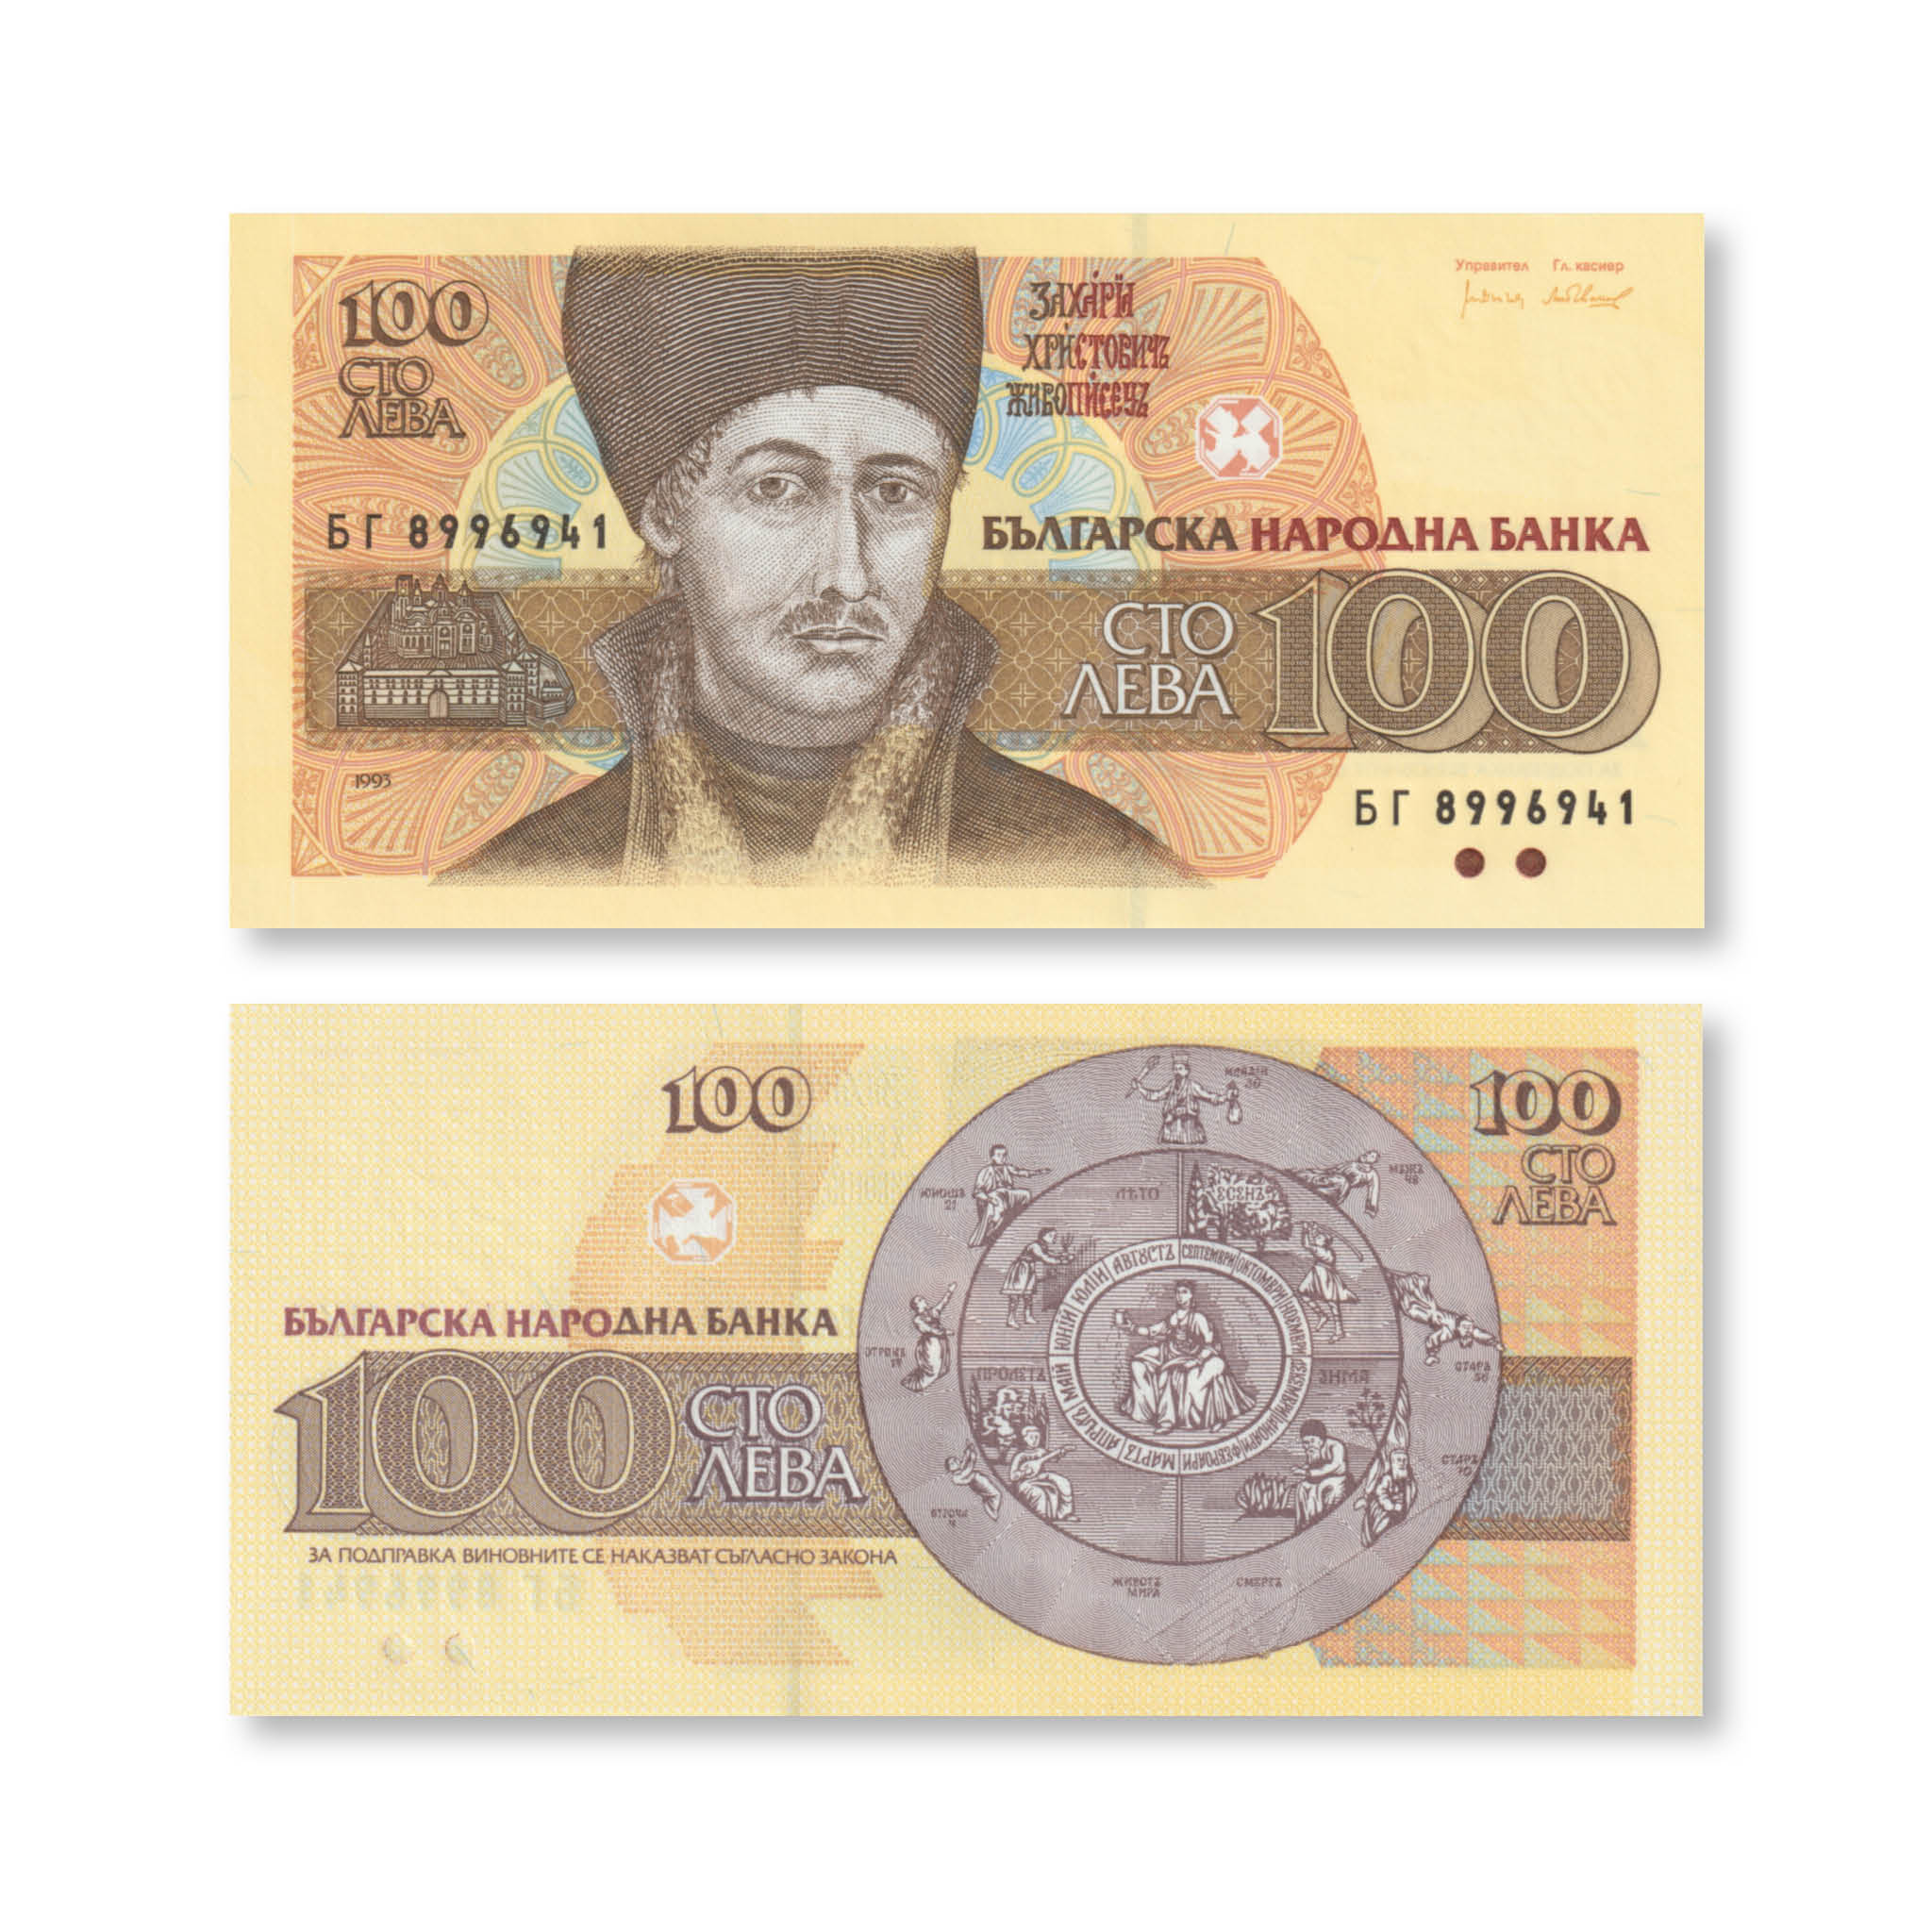 Bulgaria 100 Leva, 1993, B212b, P102b, UNC - Robert's World Money - World Banknotes